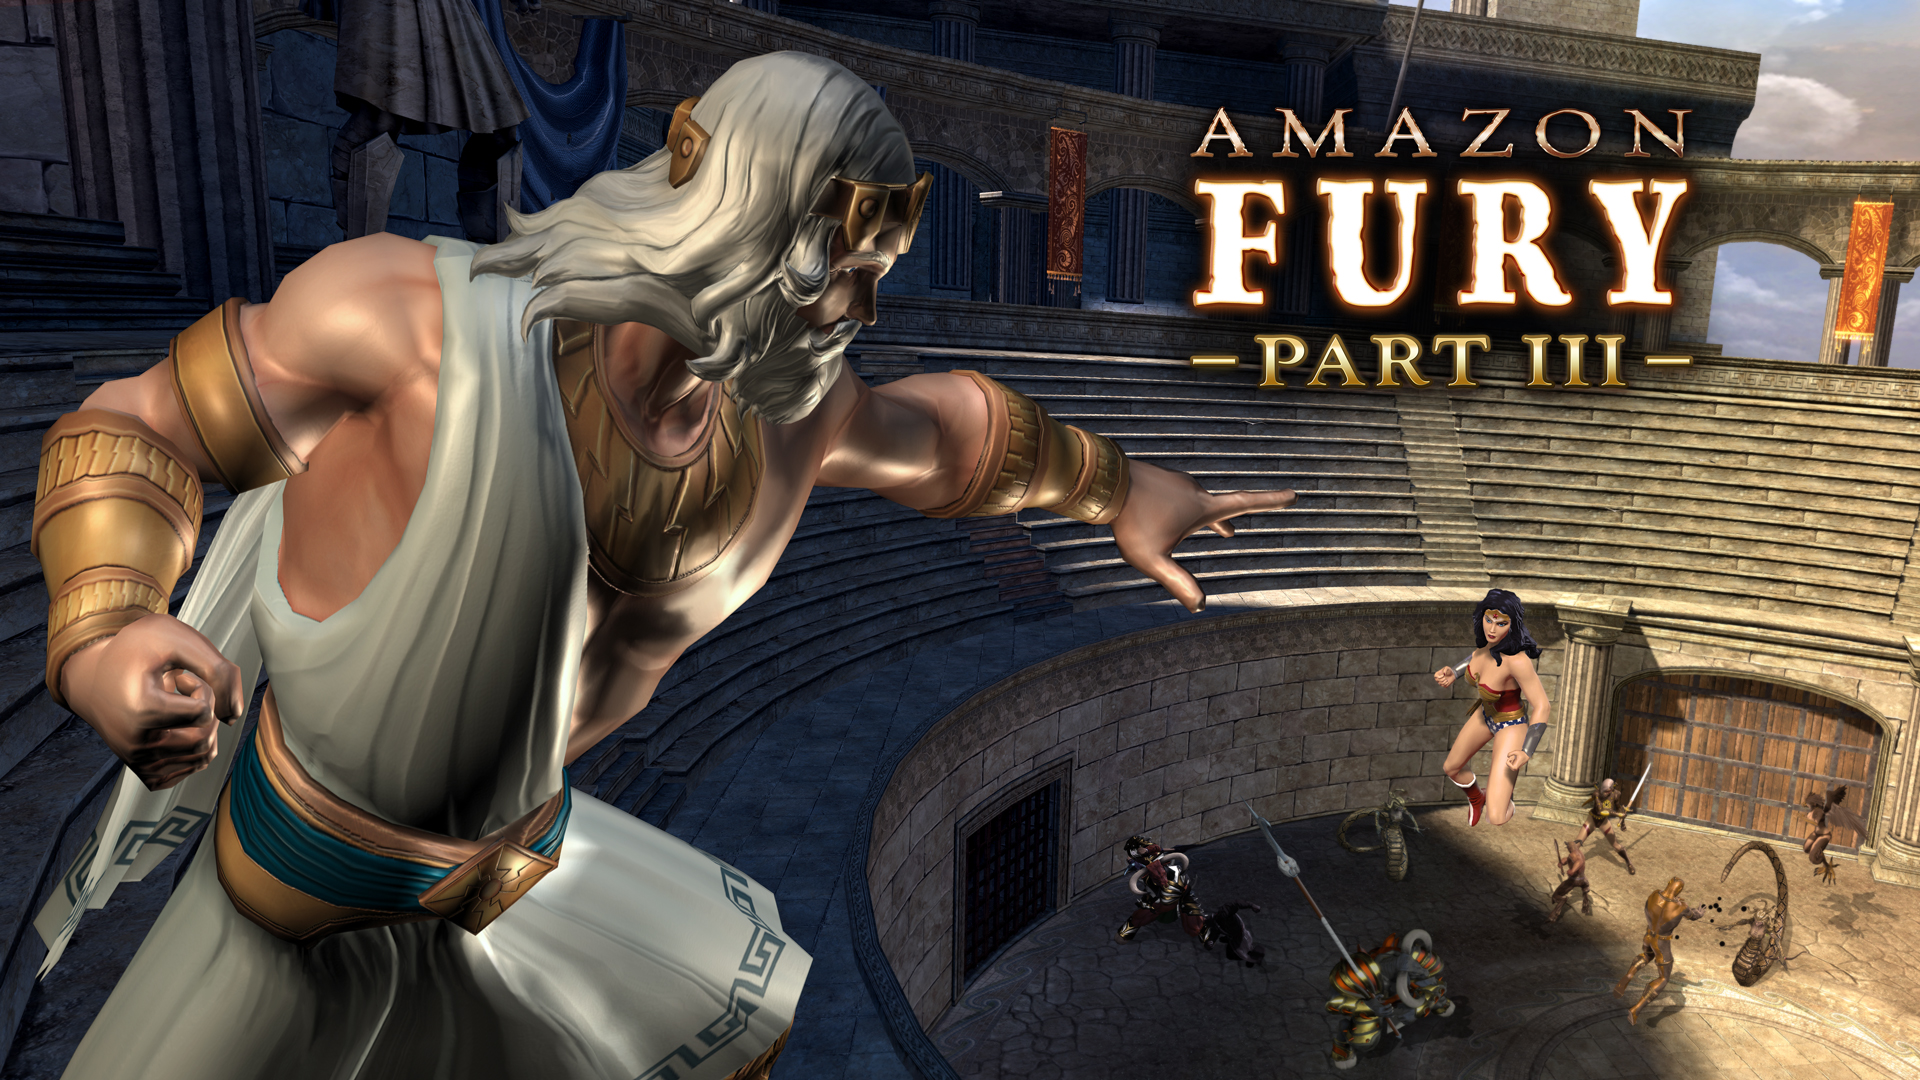 Episode Spotlight: Amazon Fury Part III